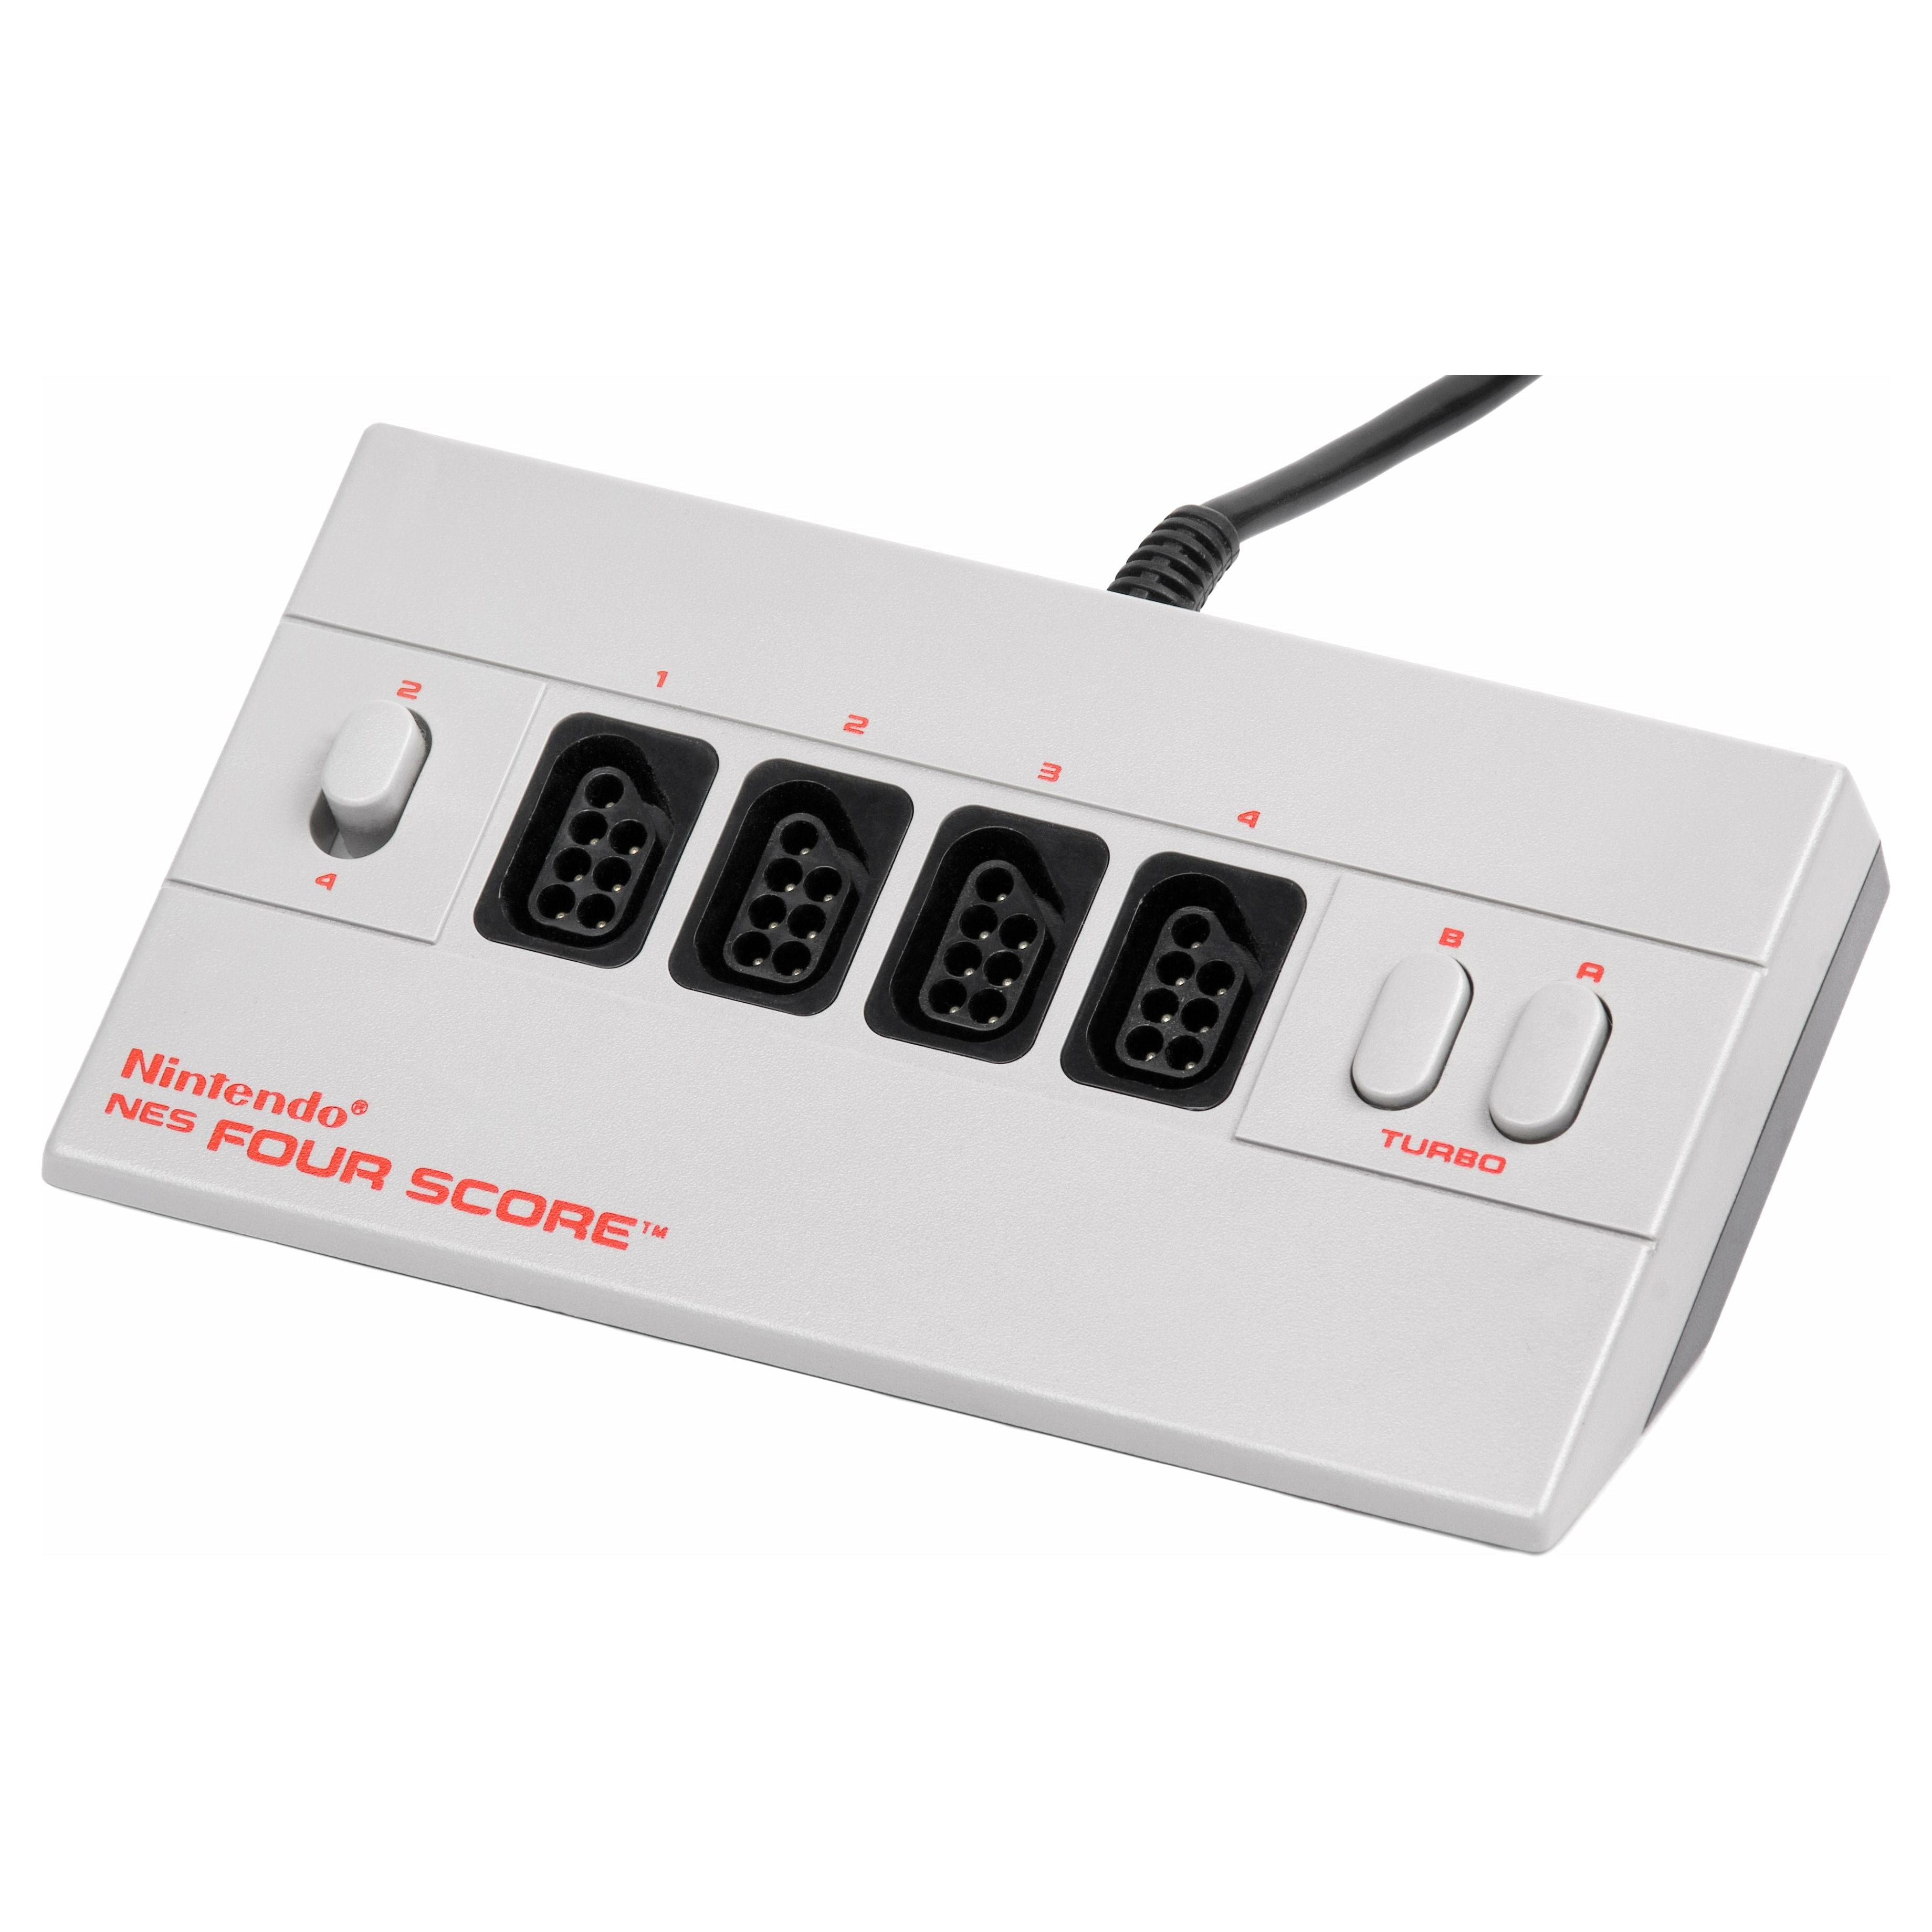 NES - Four Score NES 4 Player Adapter.